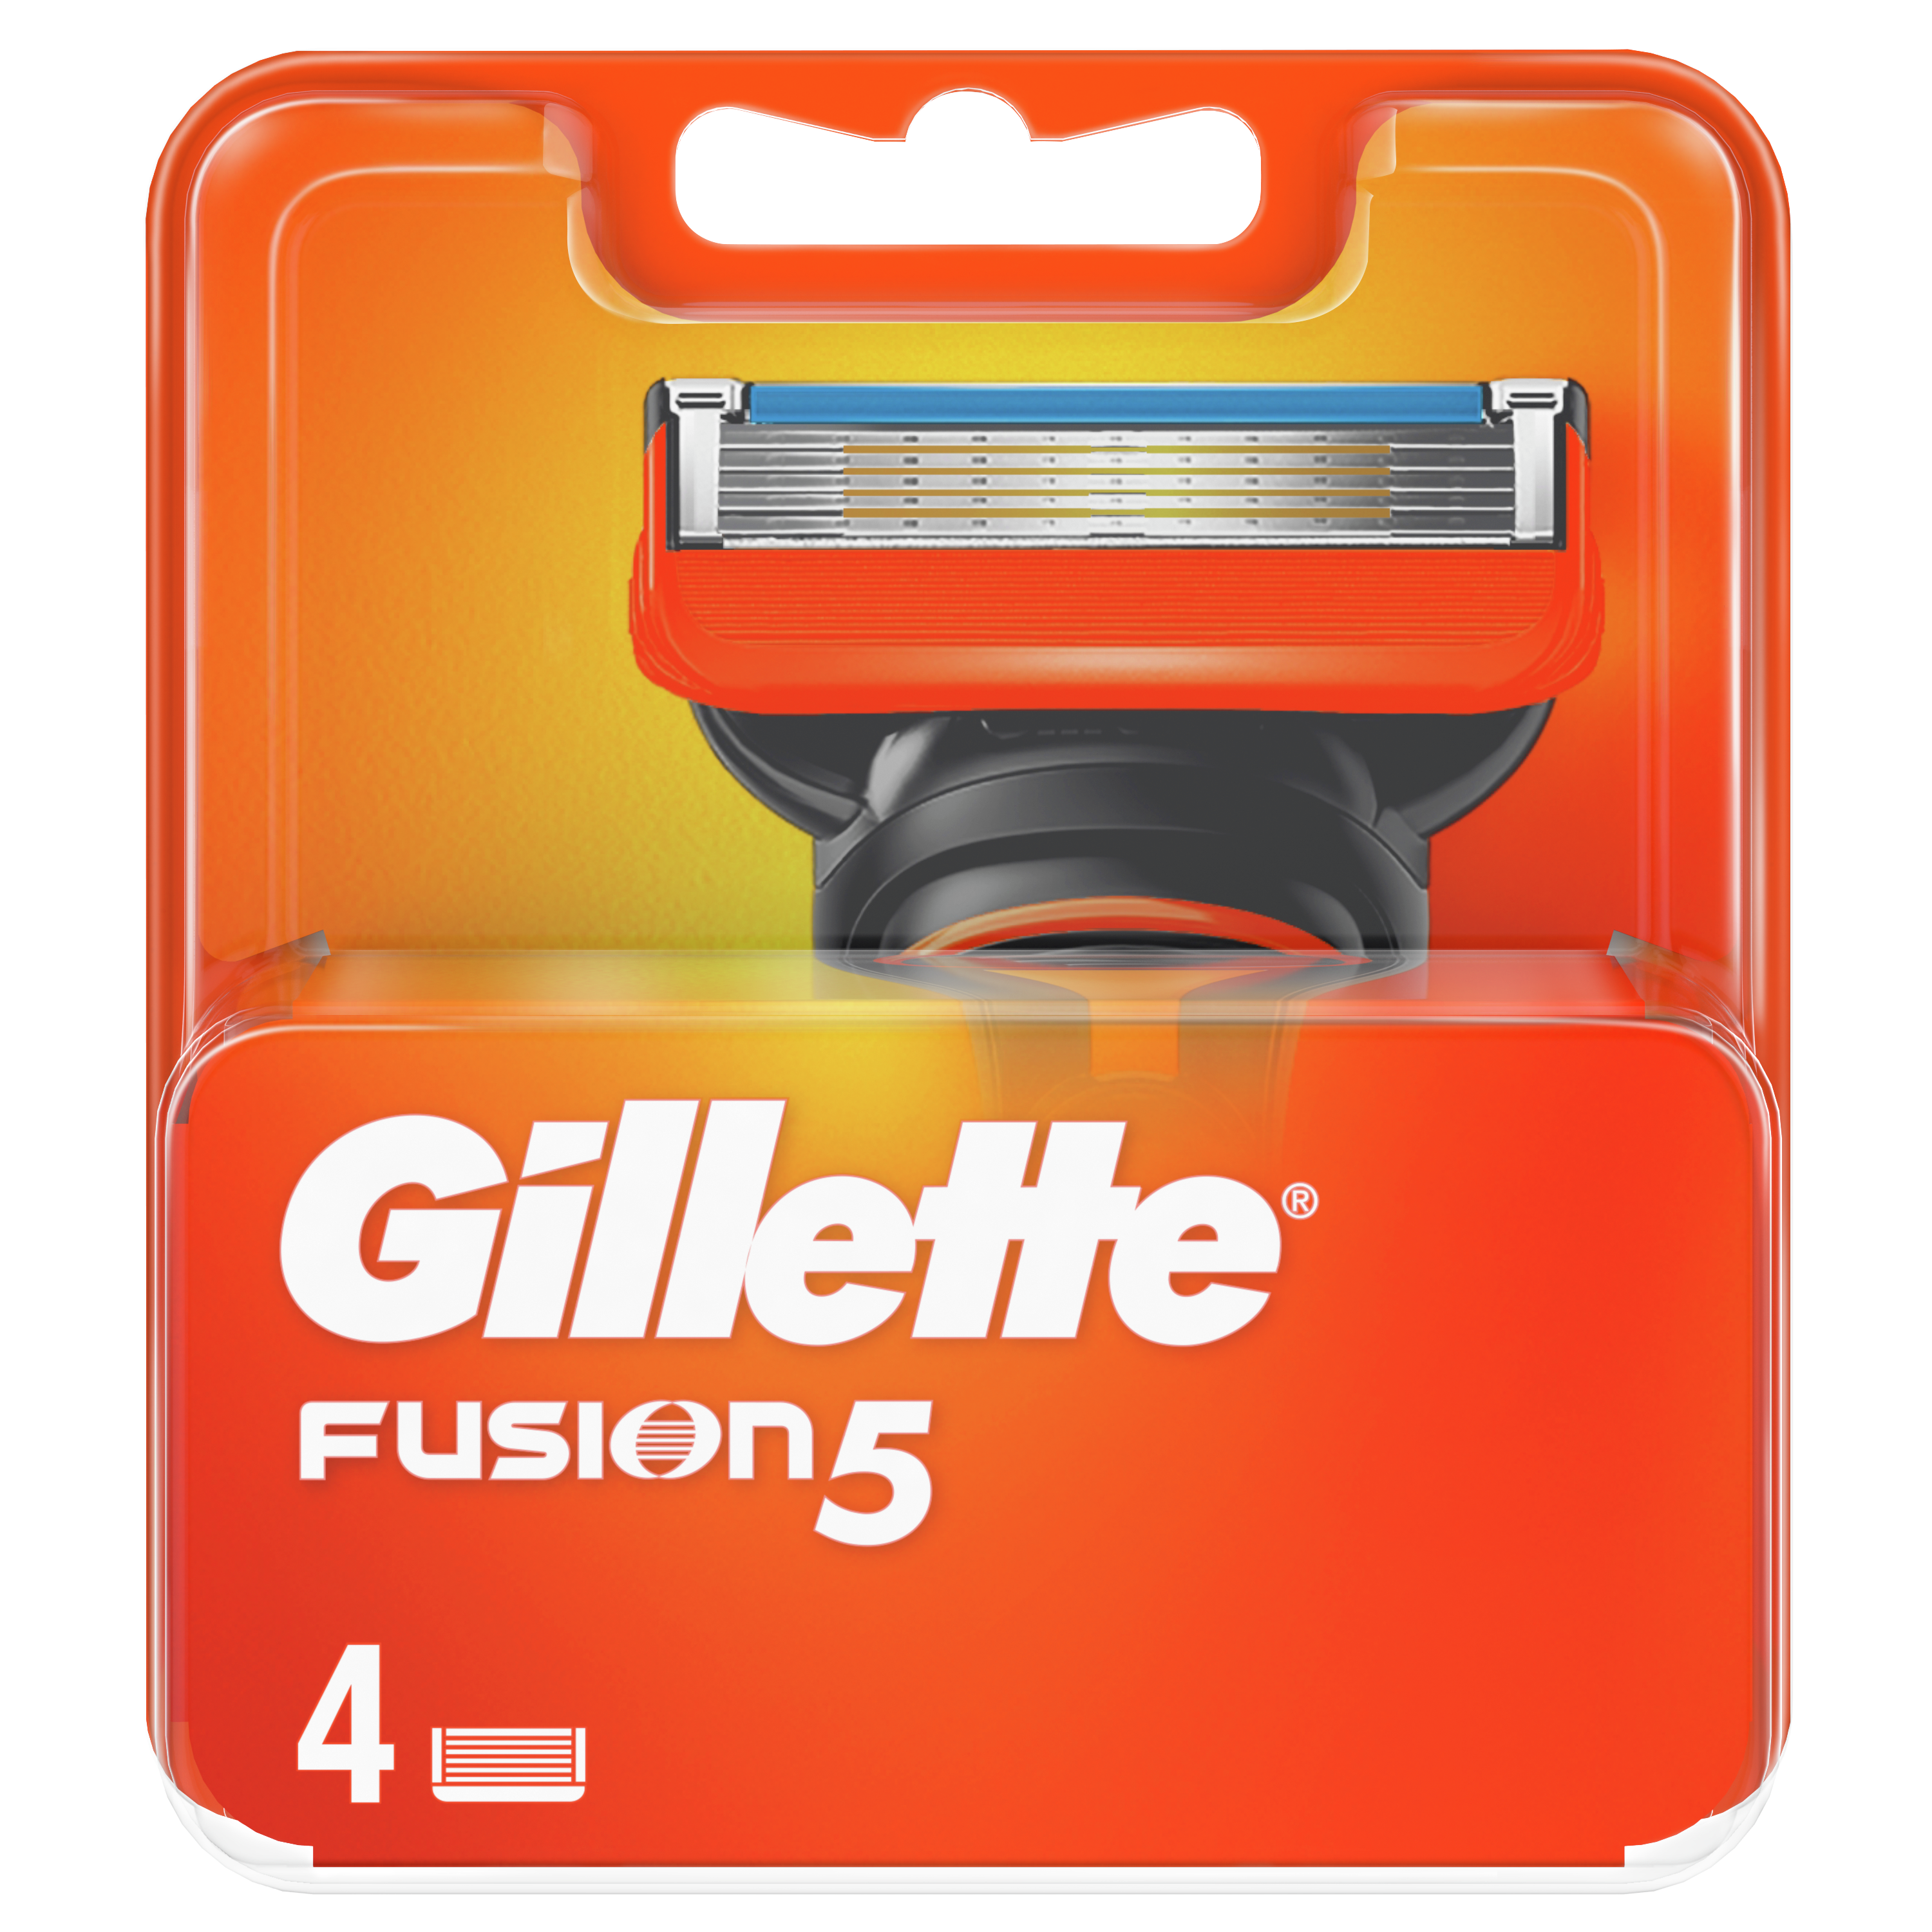 Gillette Fusion5 Men's Razor Blade Refills, 8 Count, Shaving & Depilatory